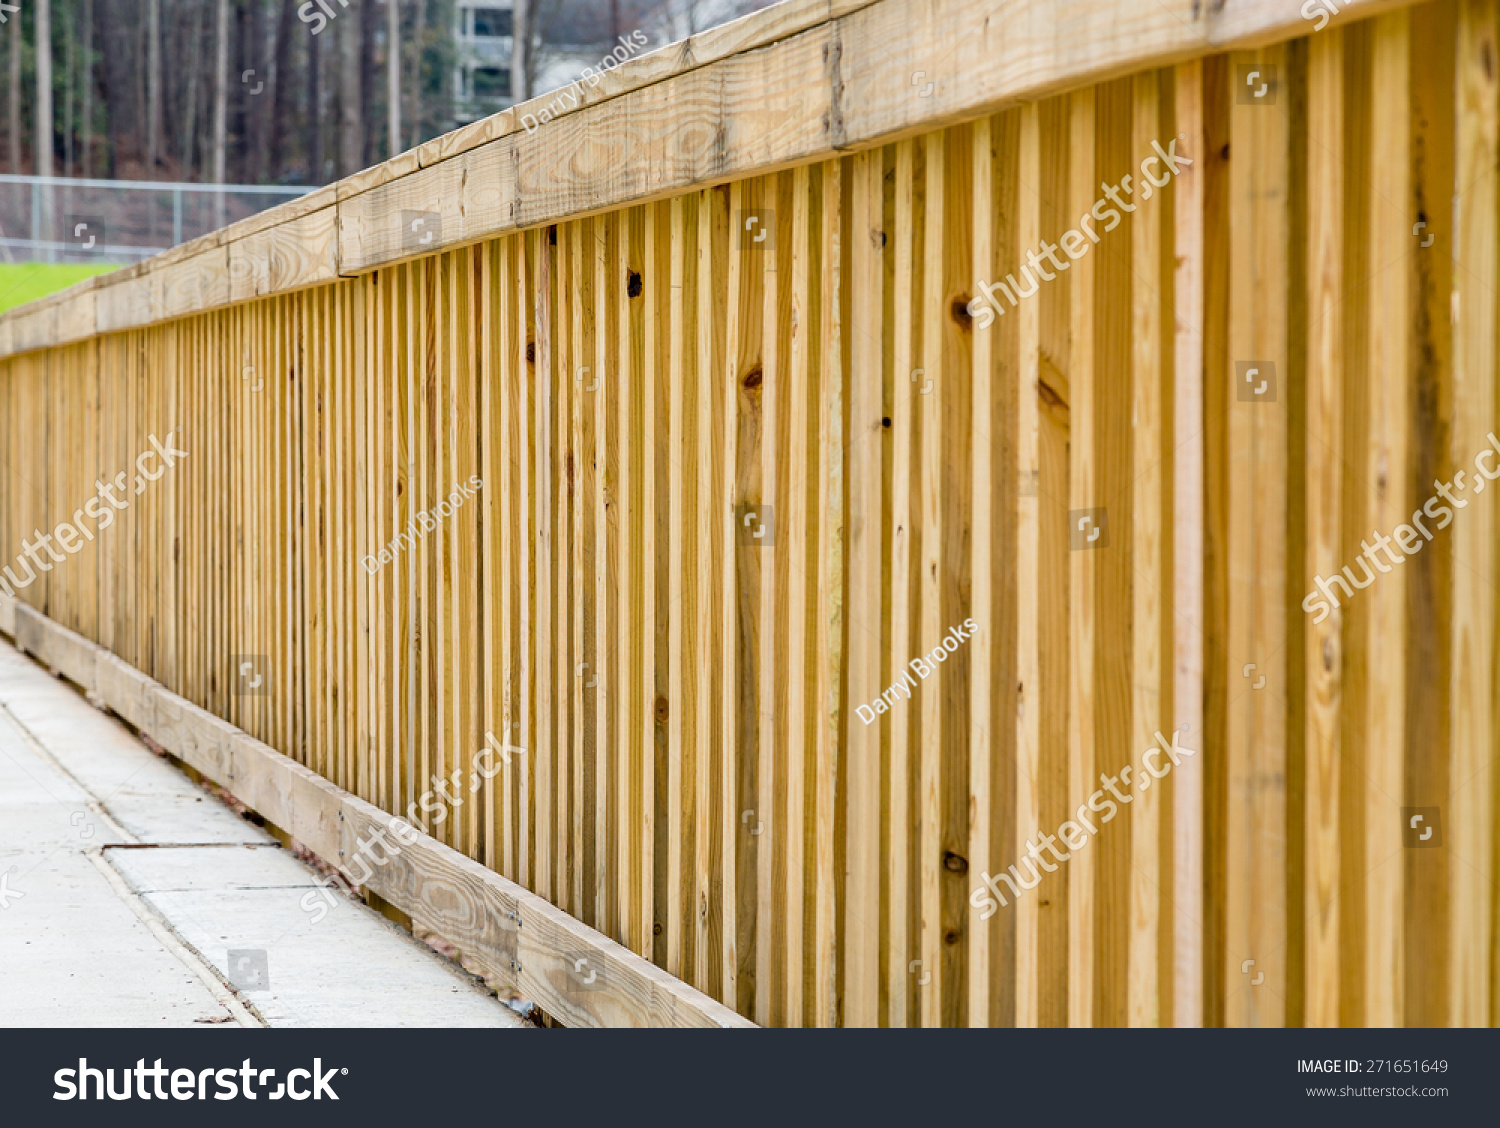 New treated pine lumber railings on the side of a bridge #271651649